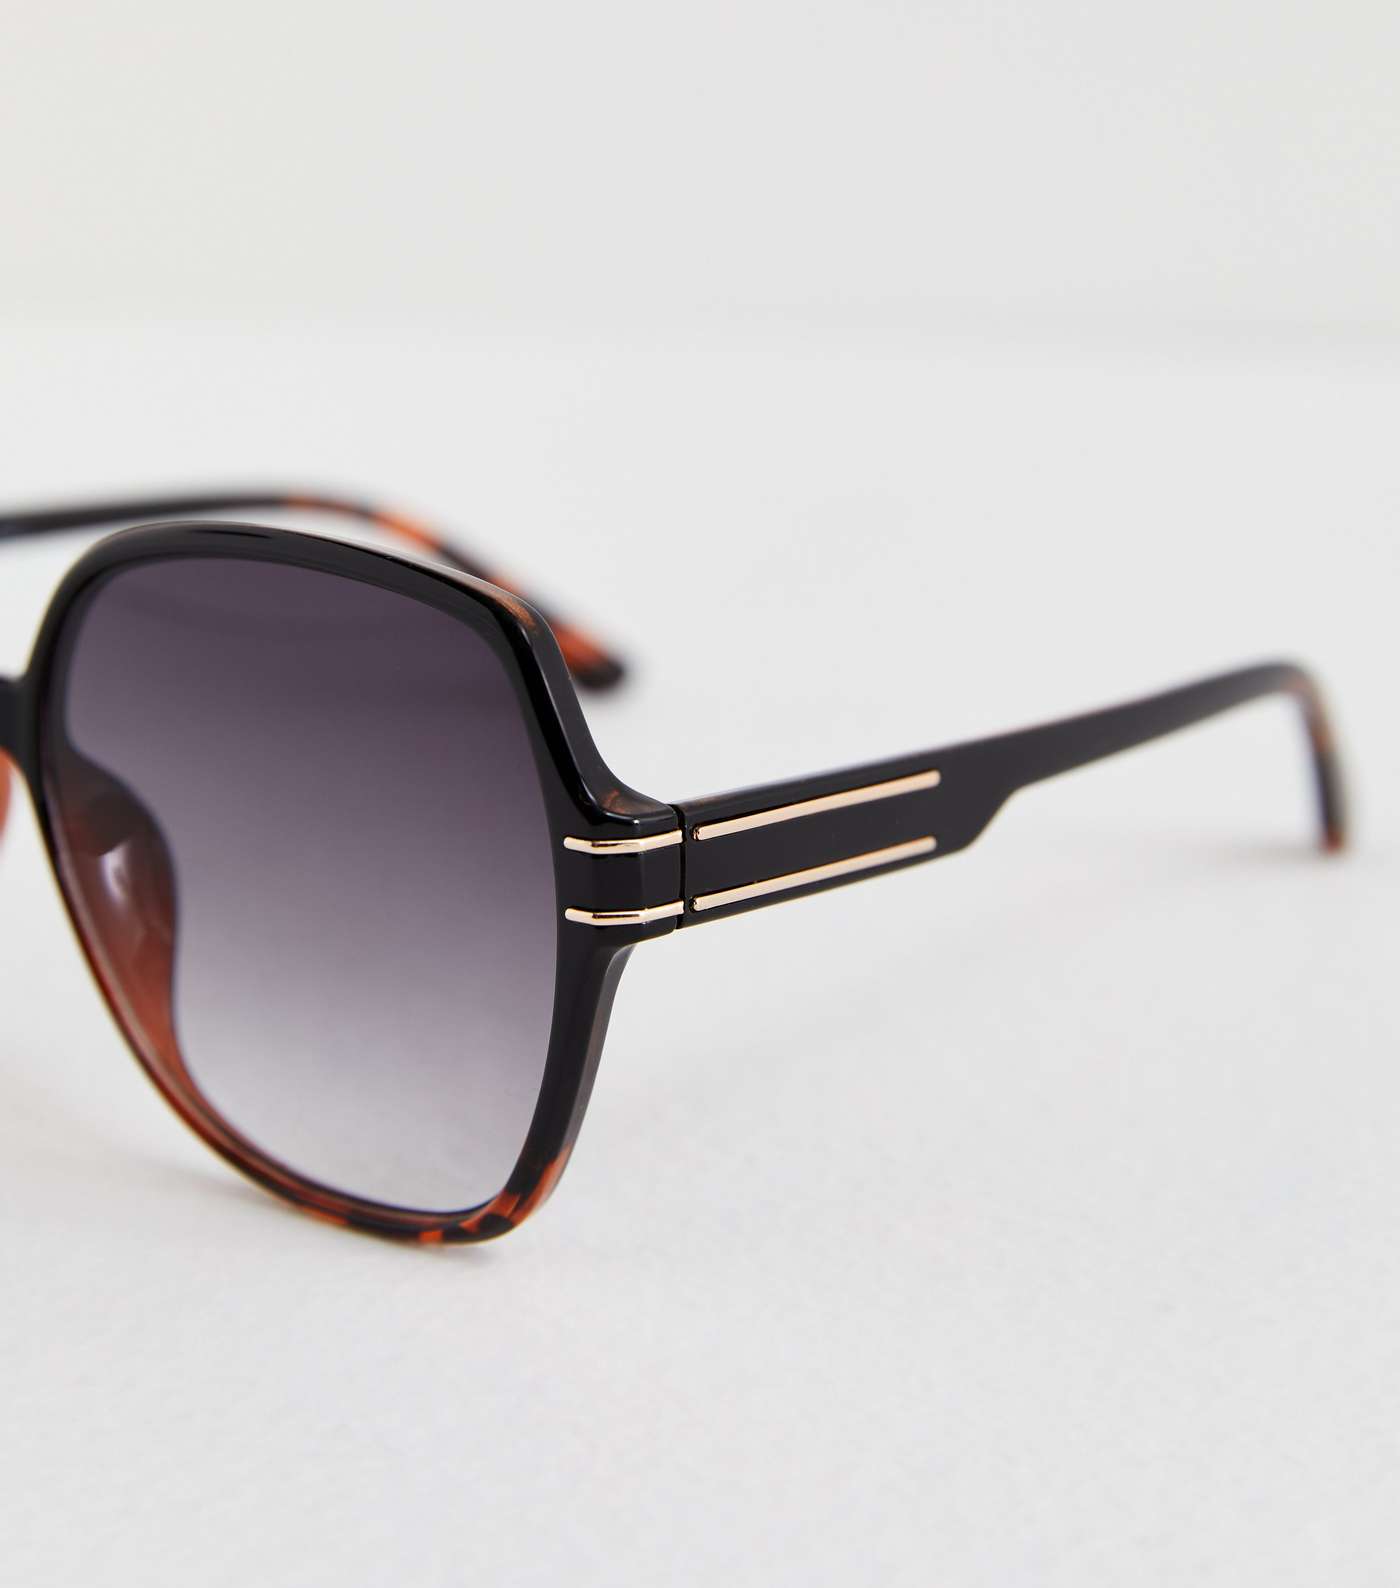 Black Tortoiseshell Effect Square Frame Sunglasses Image 4